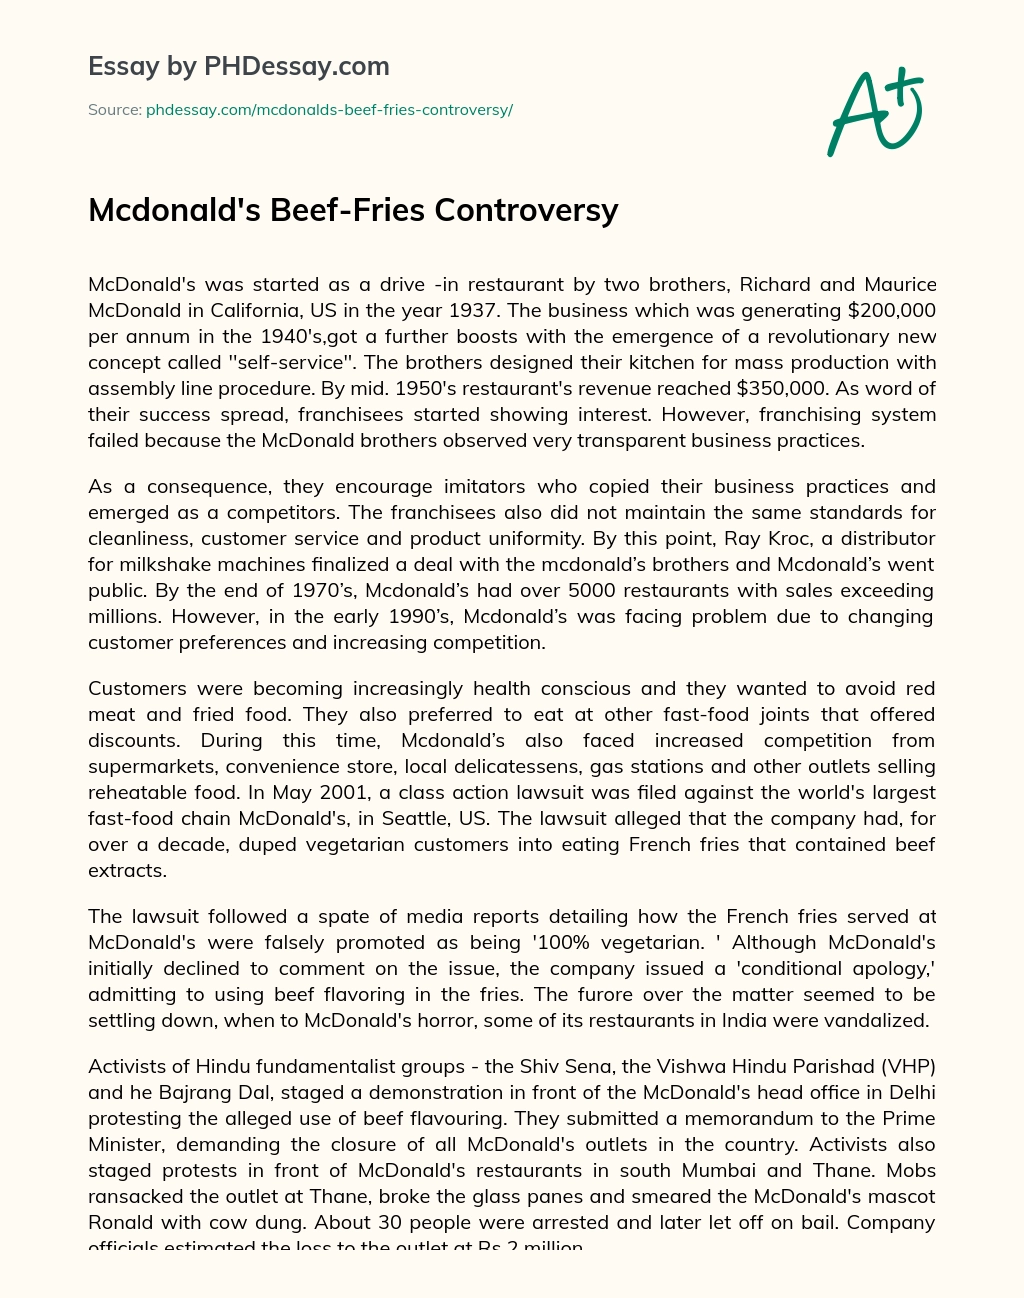 Mcdonald’s Beef-Fries Controversy essay